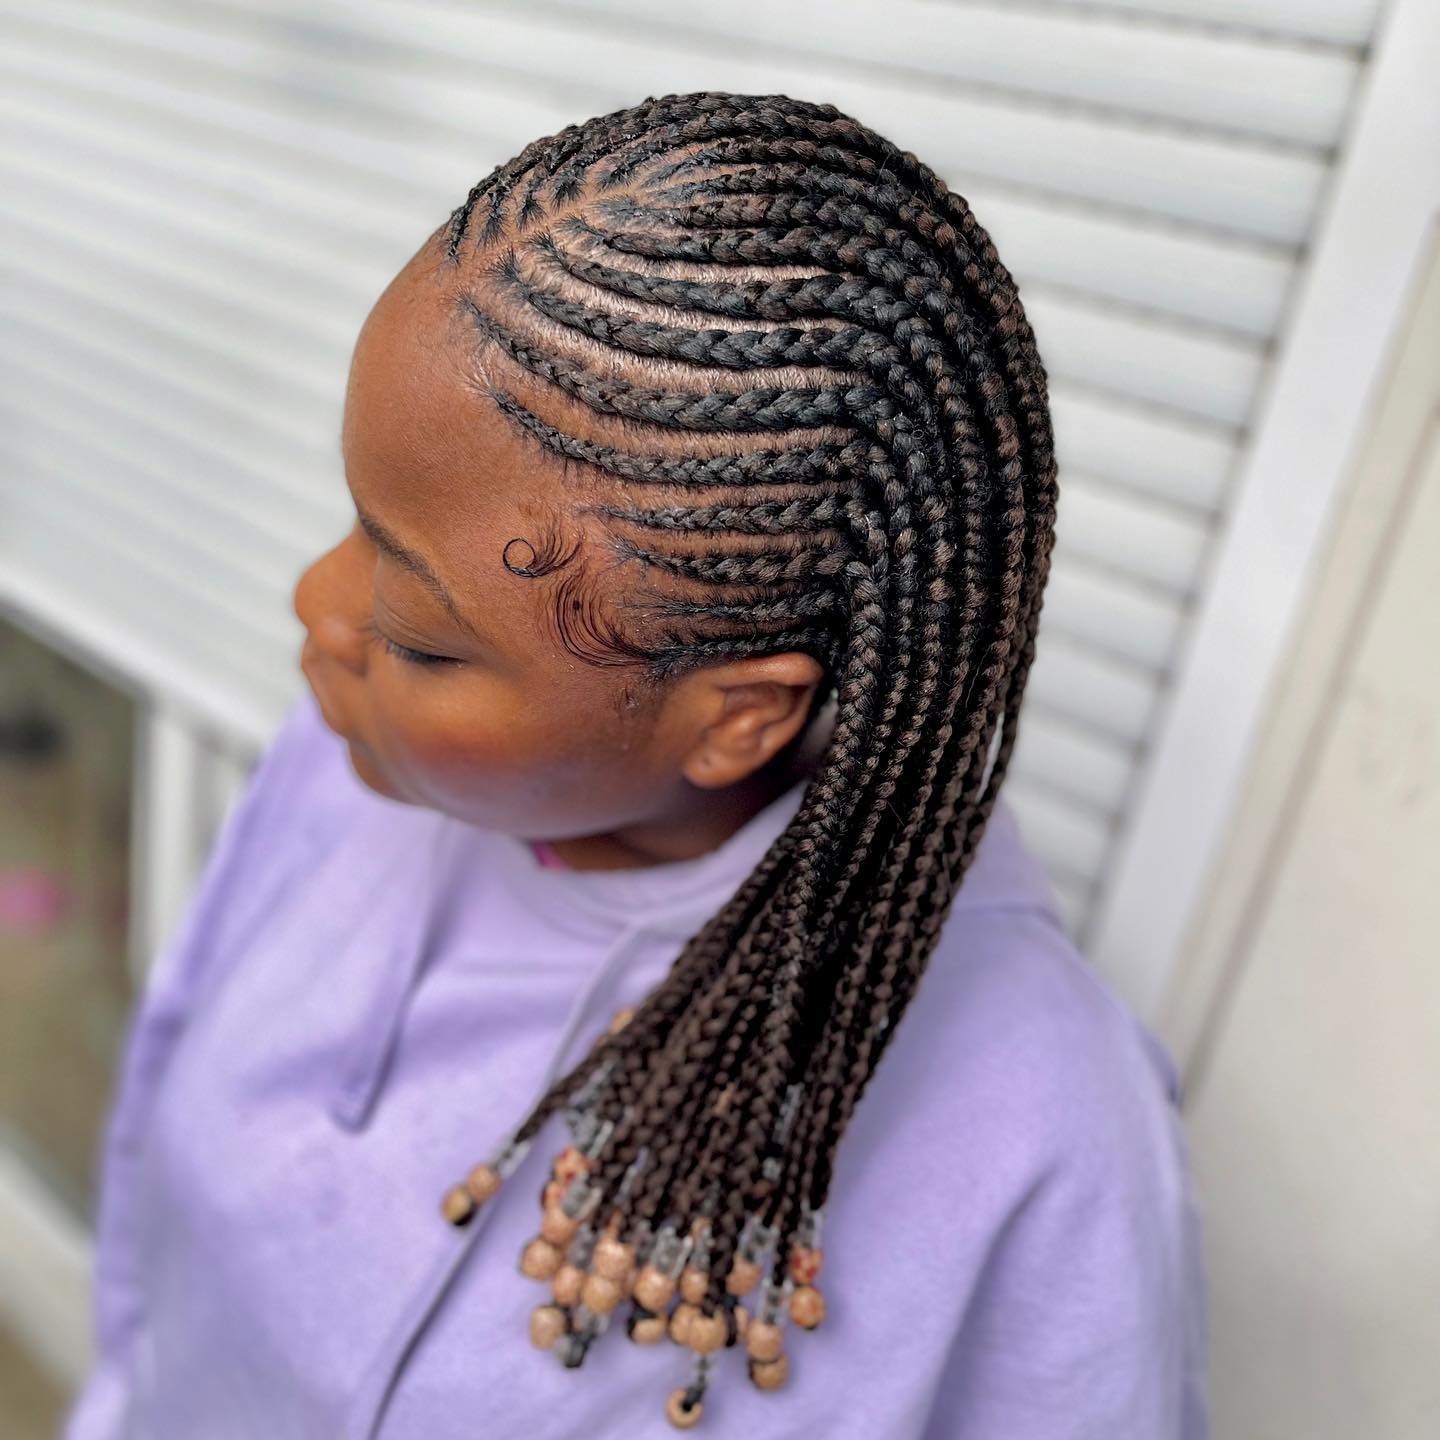 Hairstyles : 2022 Trending Cornrow Styles To Try Next - Fashion - Nigeria